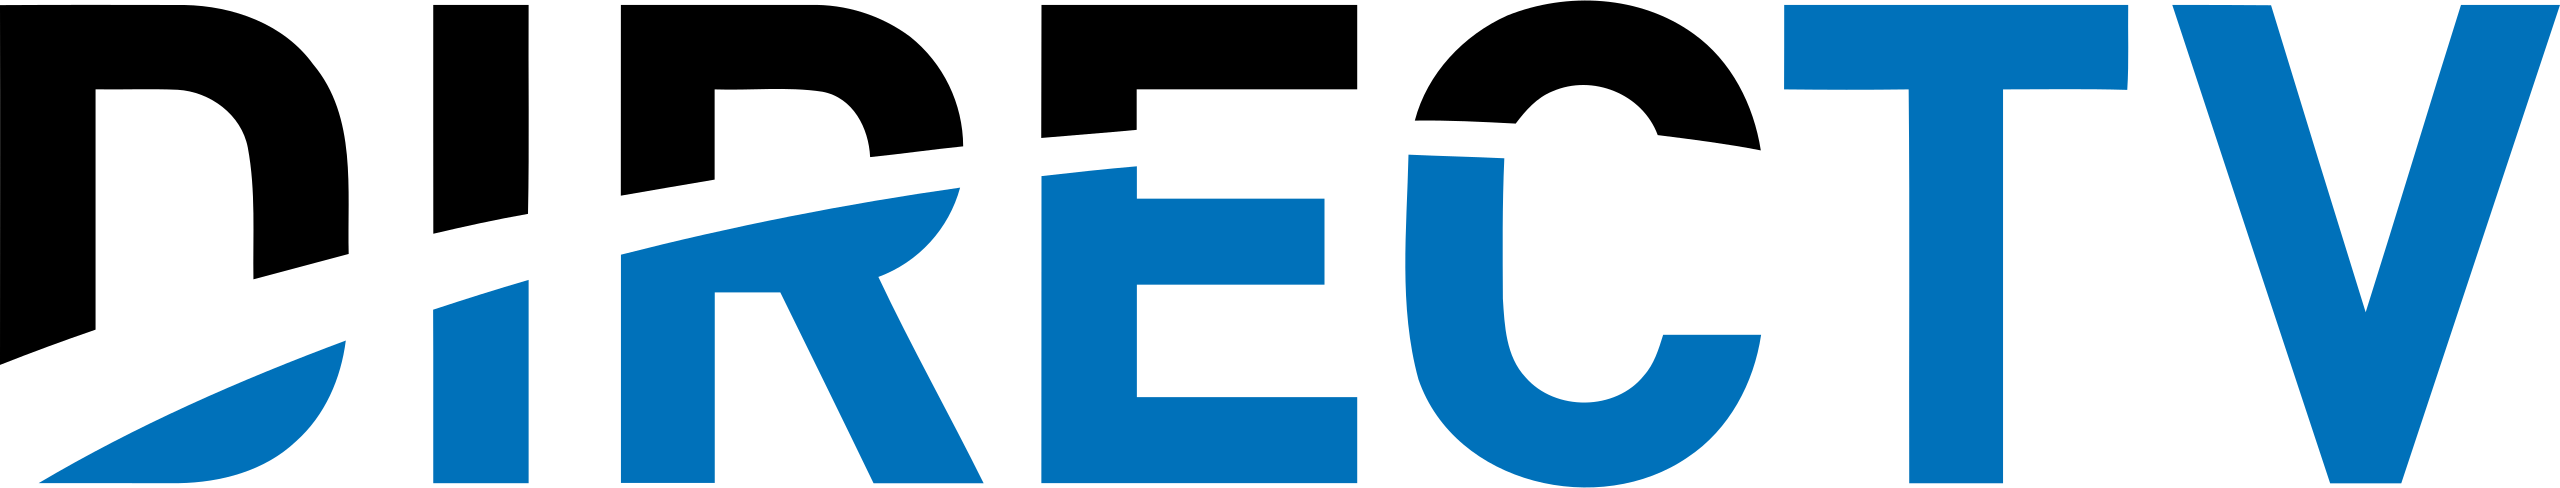 DIRECTV_2021_logo